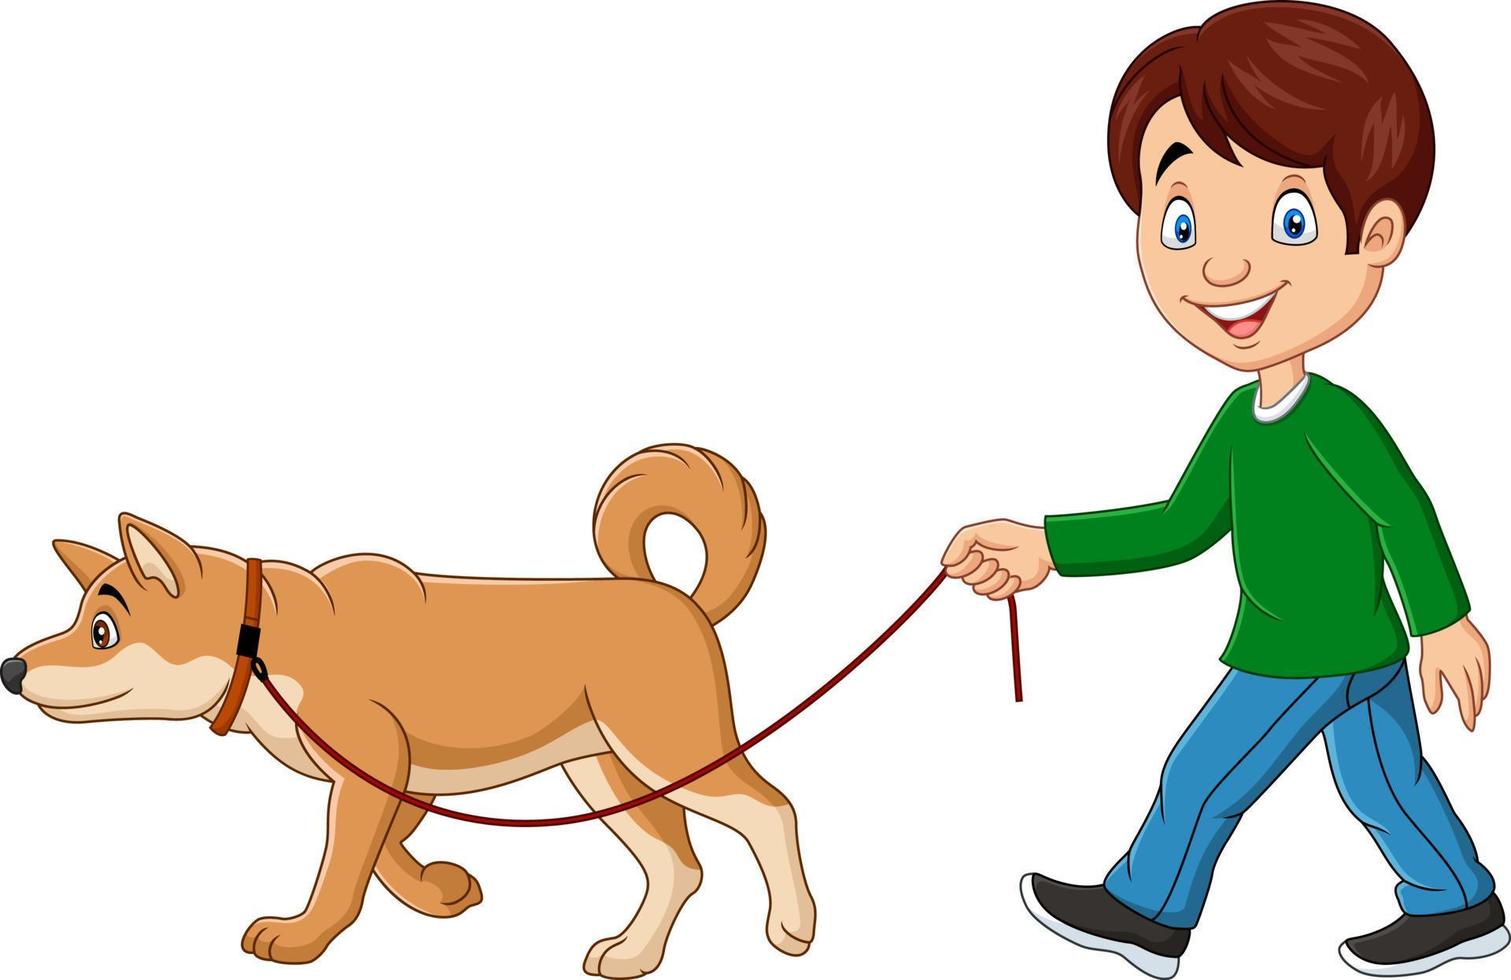 Cute boy walking with dog vector